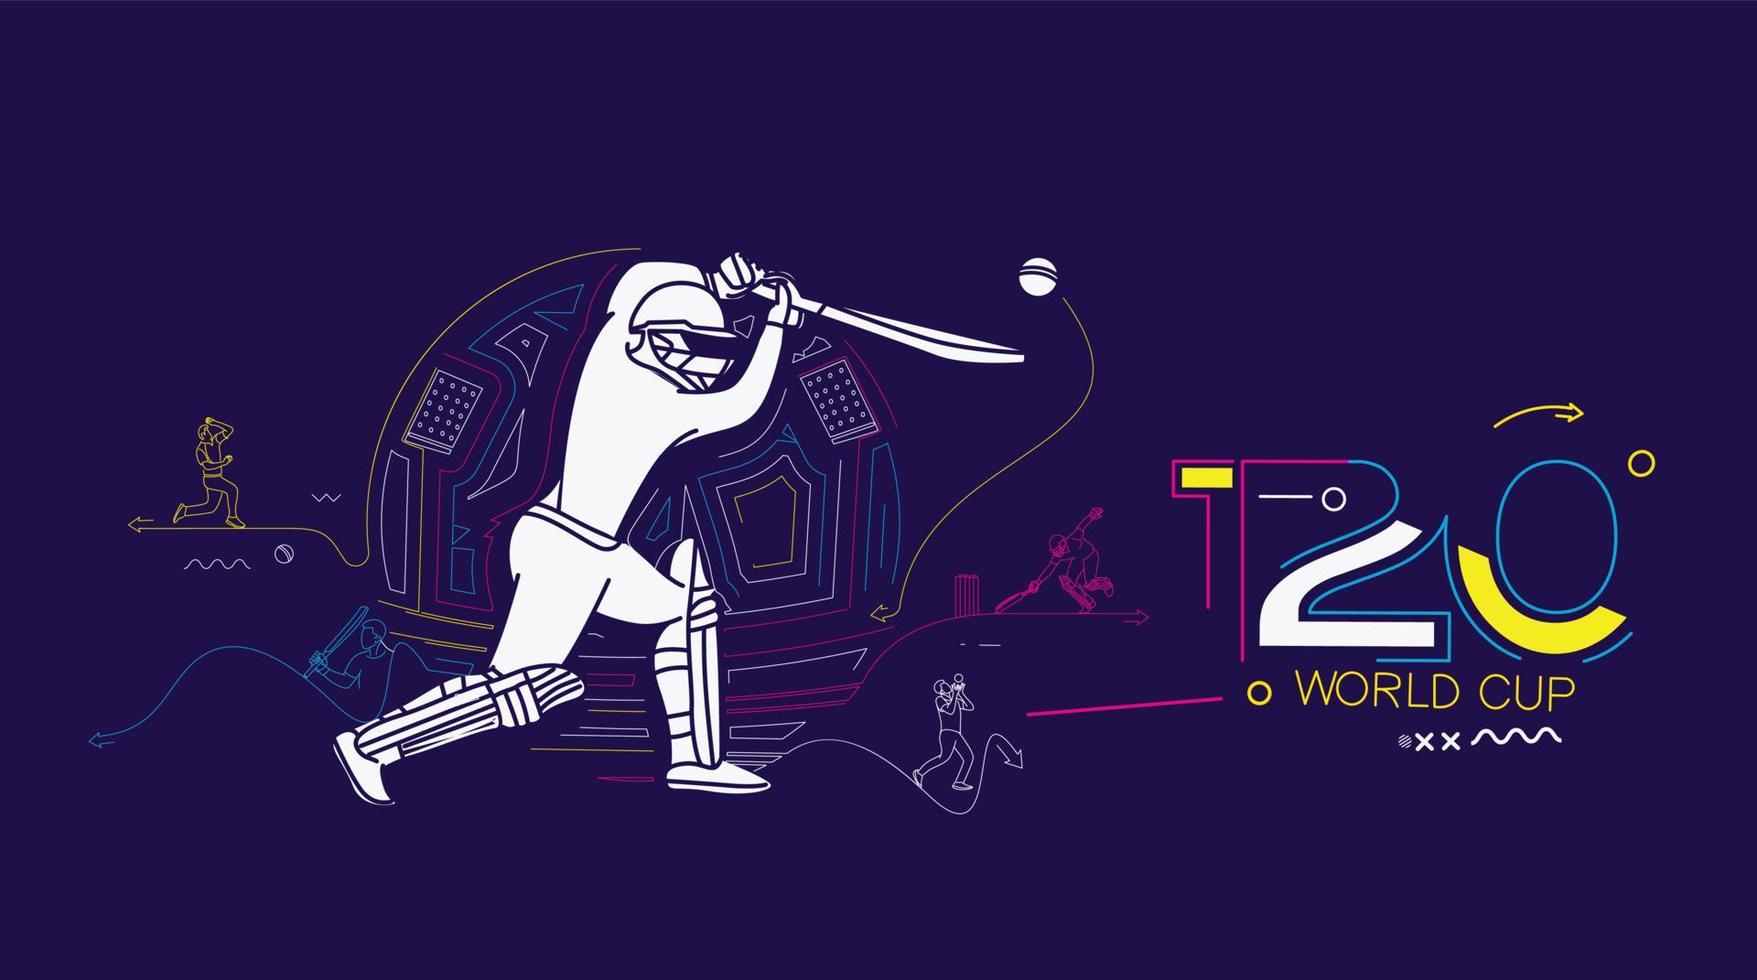 pôster do campeonato de críquete da copa do mundo t20, panfleto, modelo, brochura, decorado, design de banner. vetor